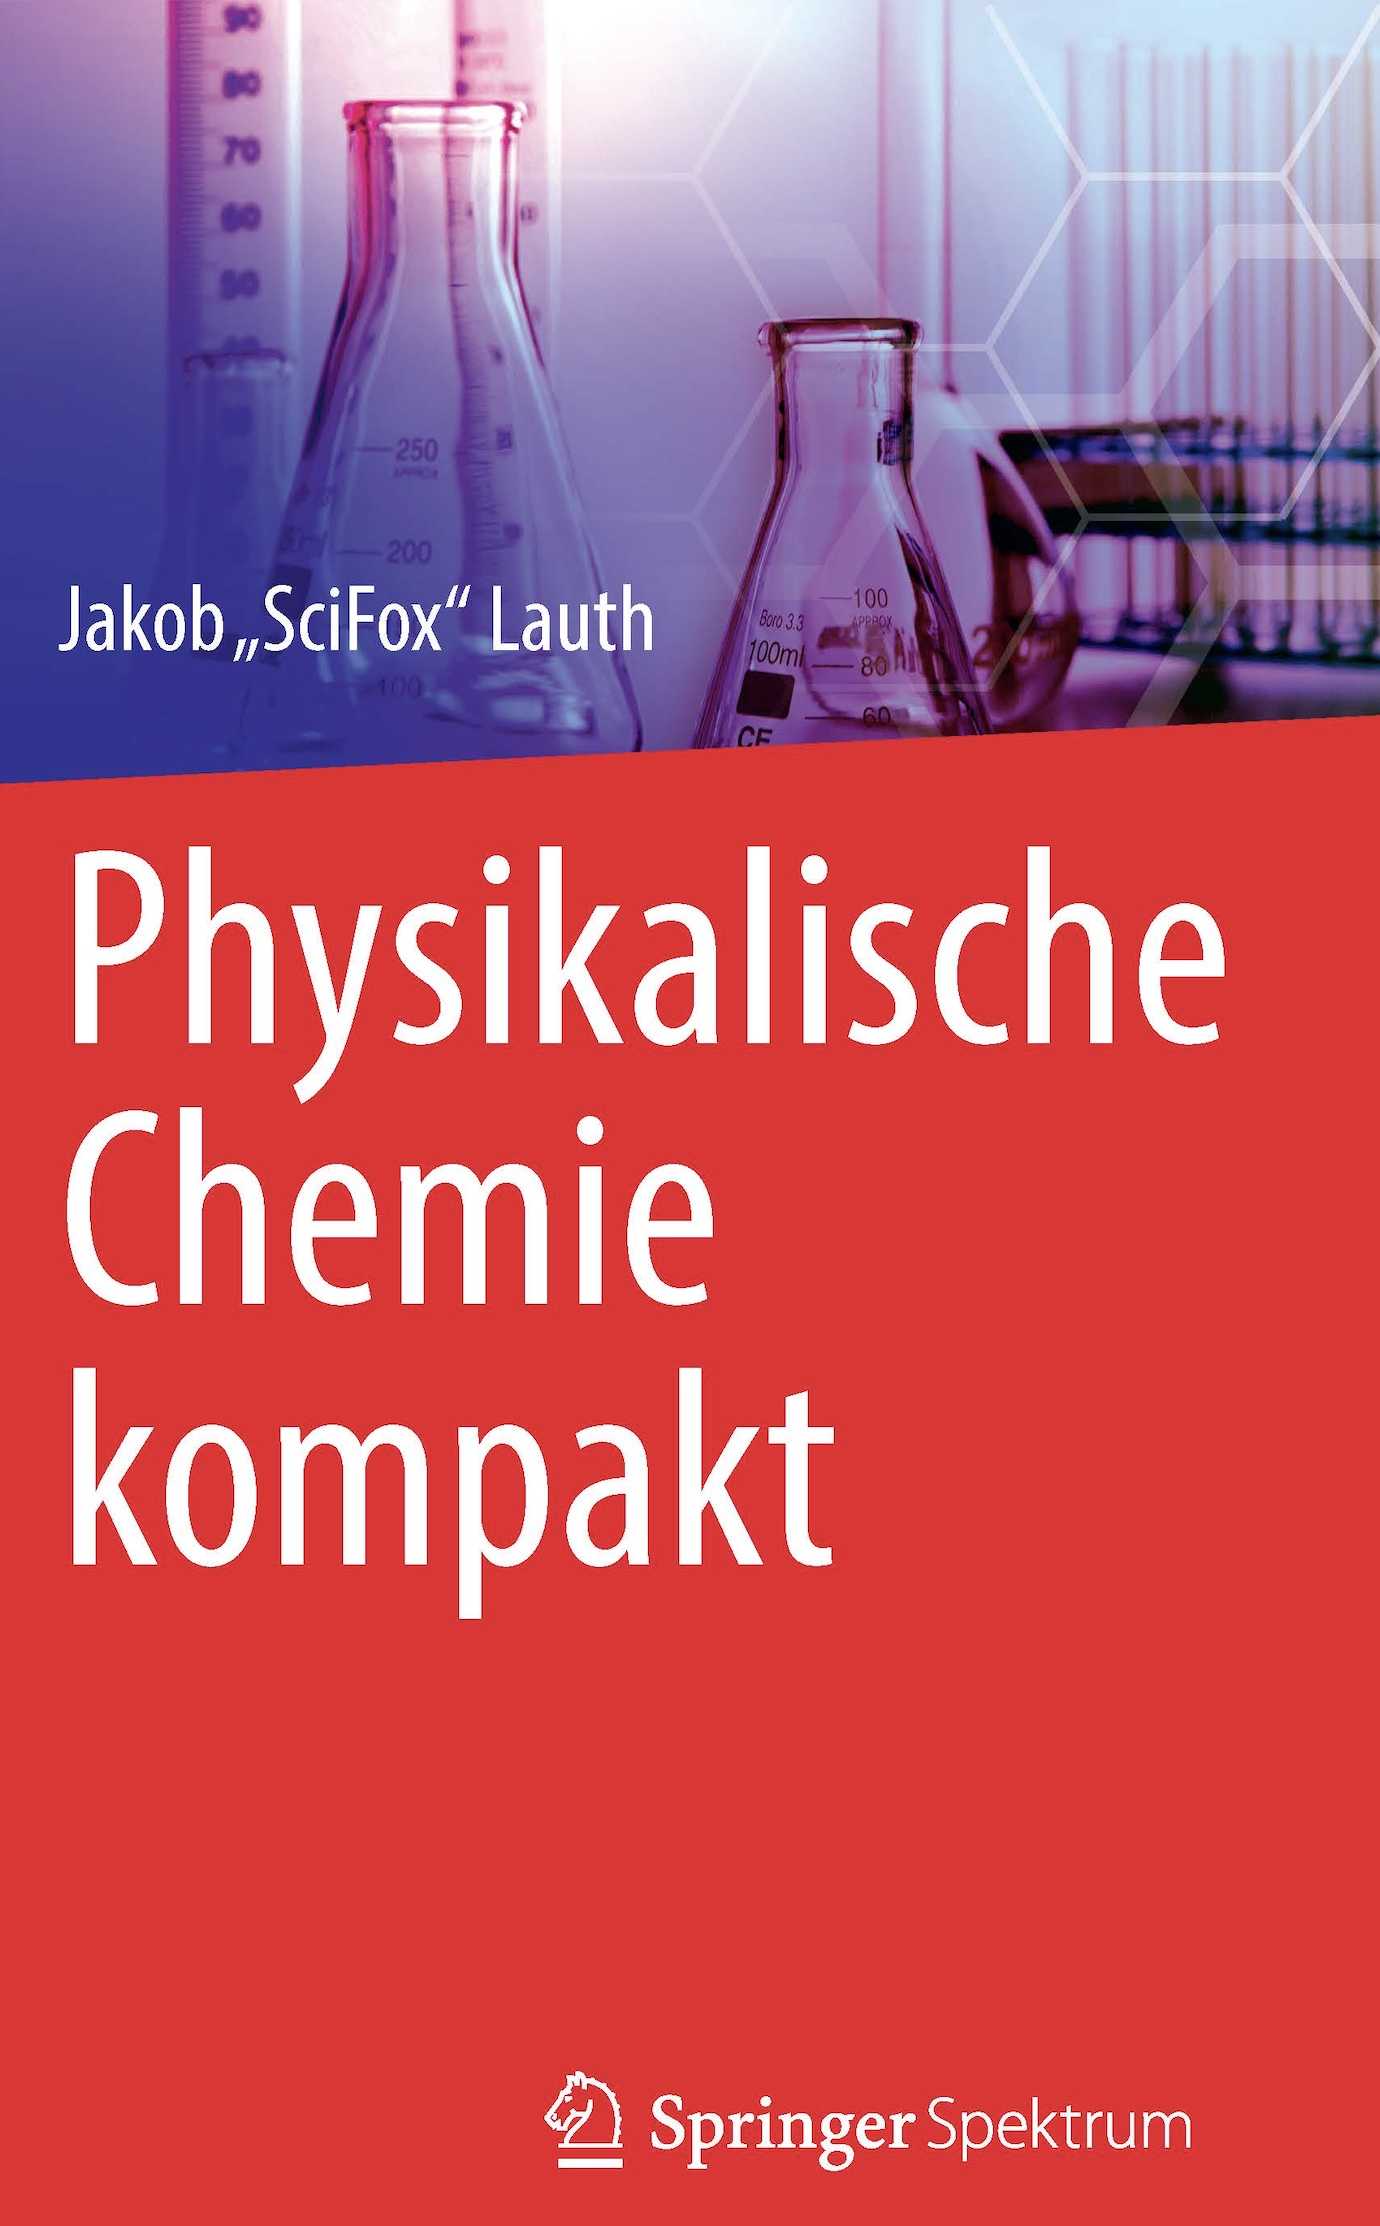 Physikalische Chemie Kompakt by Jakob "SciFox" Lauth